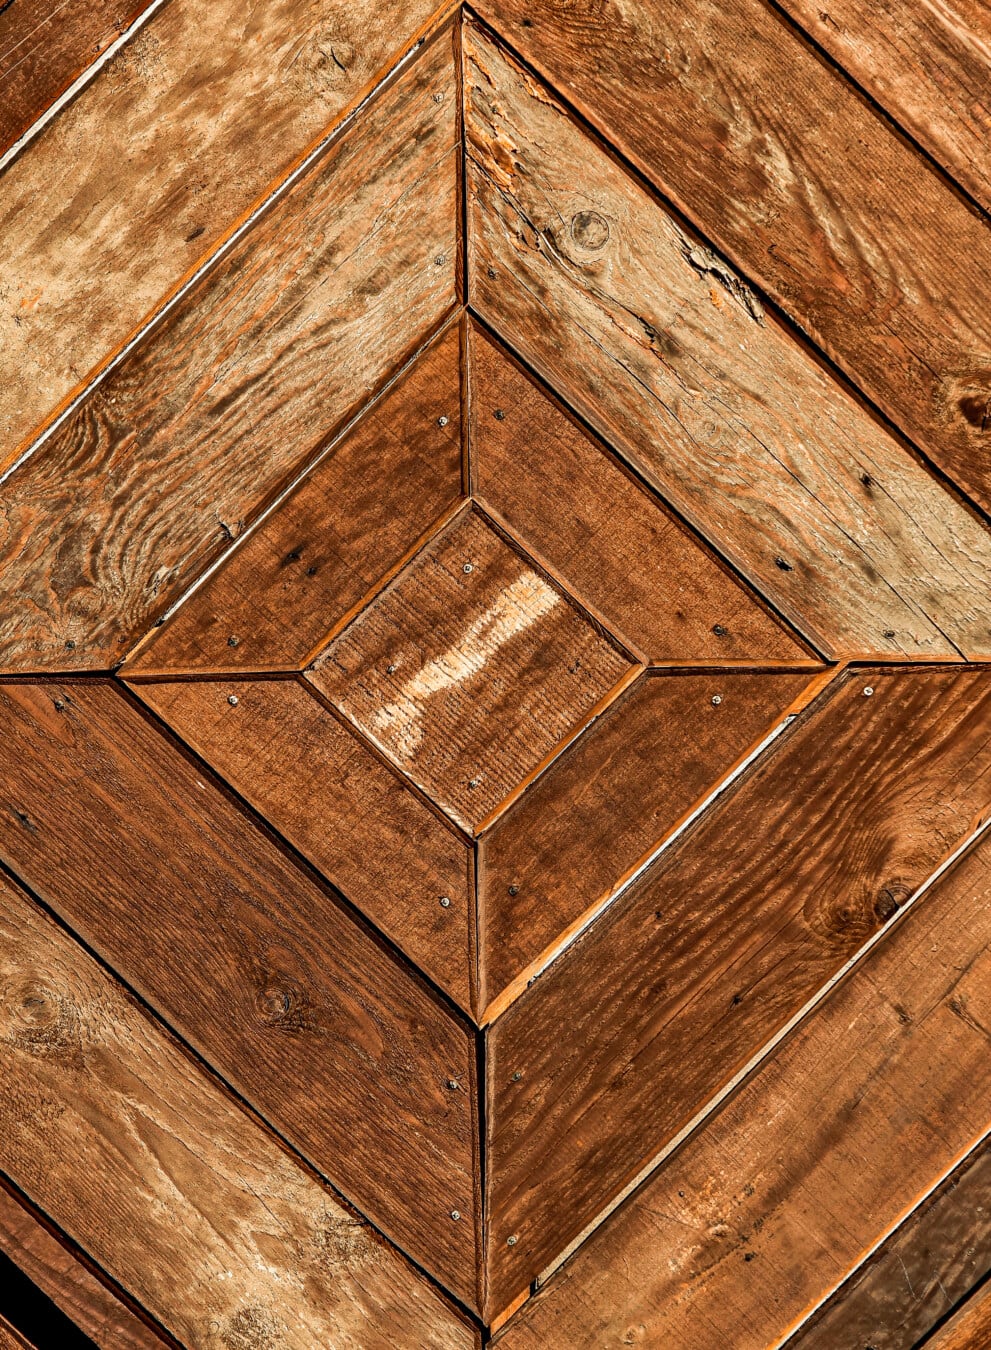 geométrica, forma, textura, madera, roble, madera dura, vertical, carpintería, madera, marrón